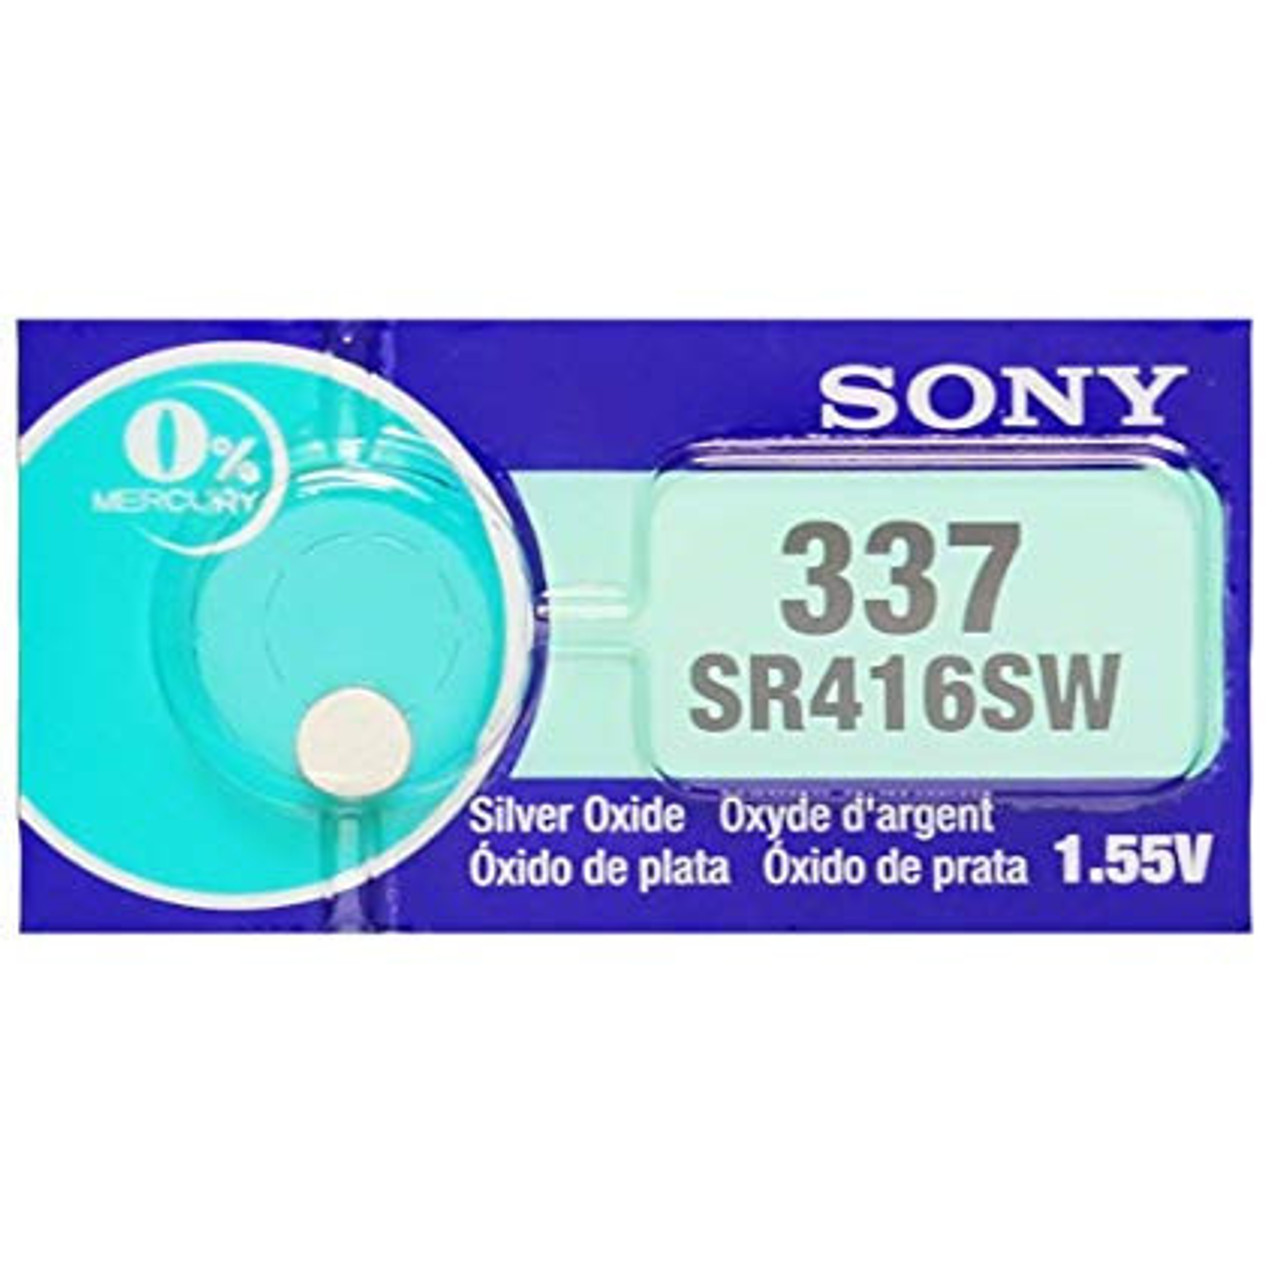 Sony Murata 337 - SR416SW Silver Oxide Button Battery 1.55V - Brooklyn  Battery Works